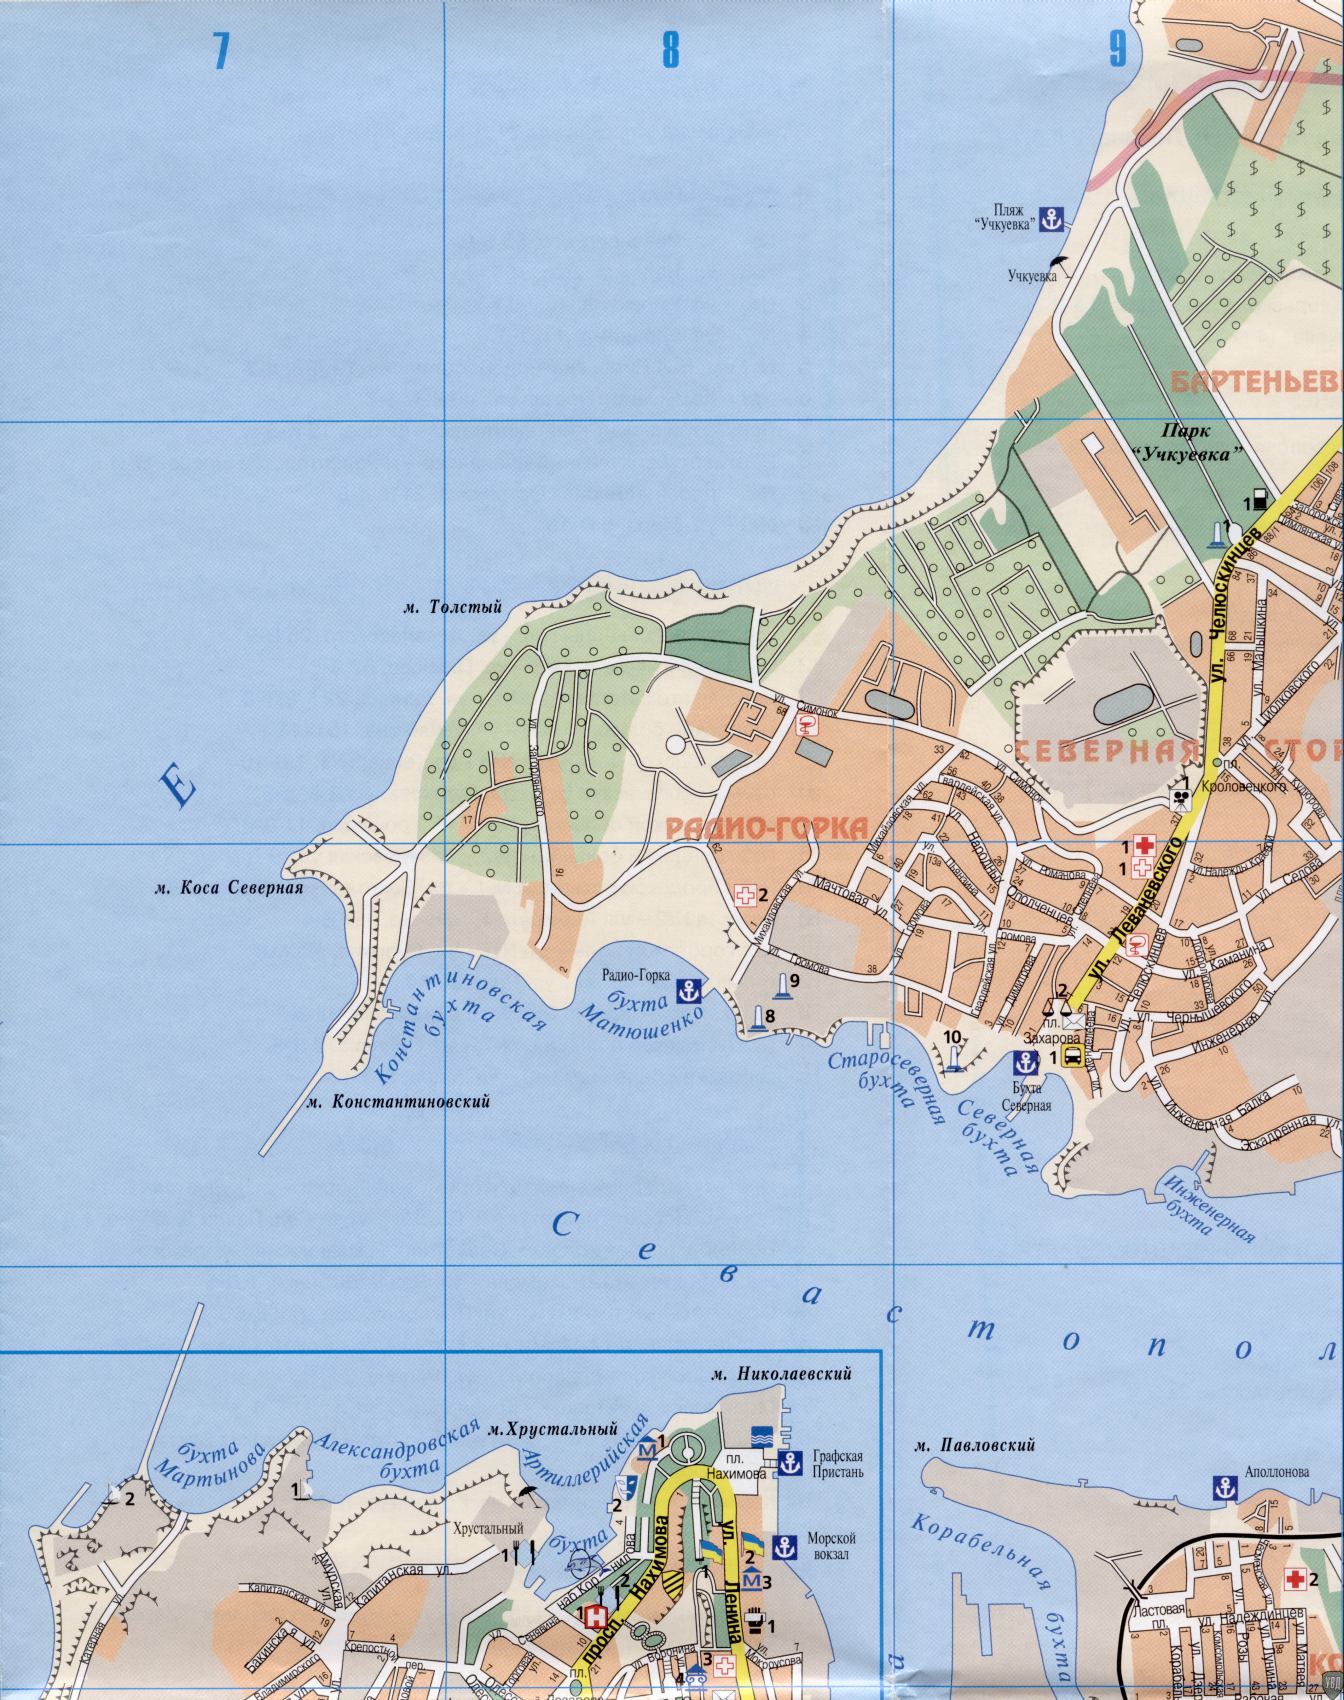 Sebastopol Karte Details (Kartensystem Sewastopol 1cm = 200 m), C0